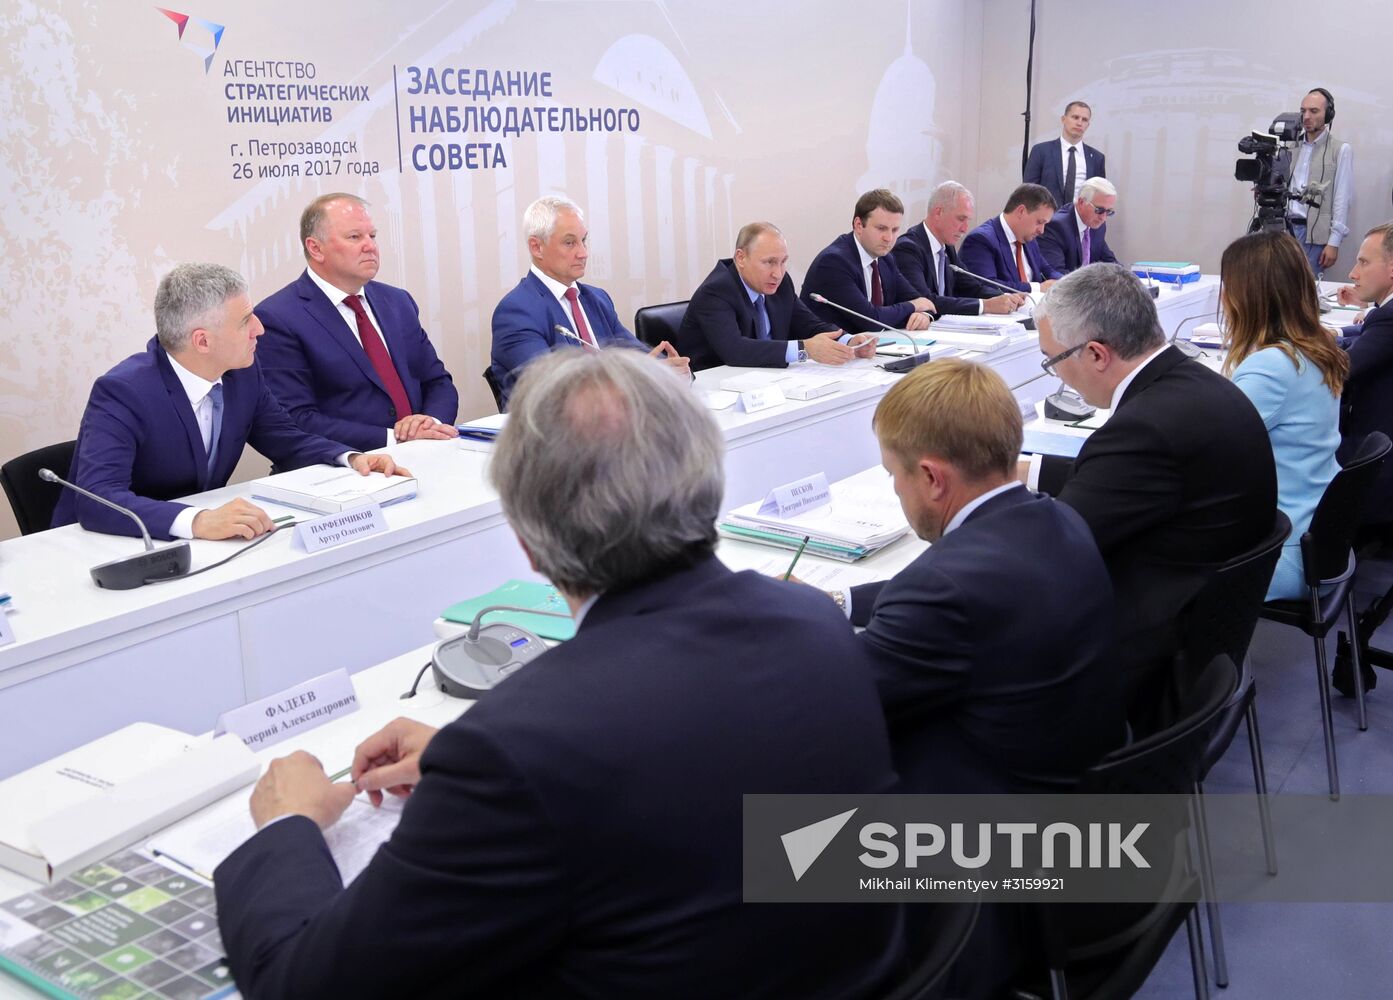 Russian President Vladimir Putin visits Karelia